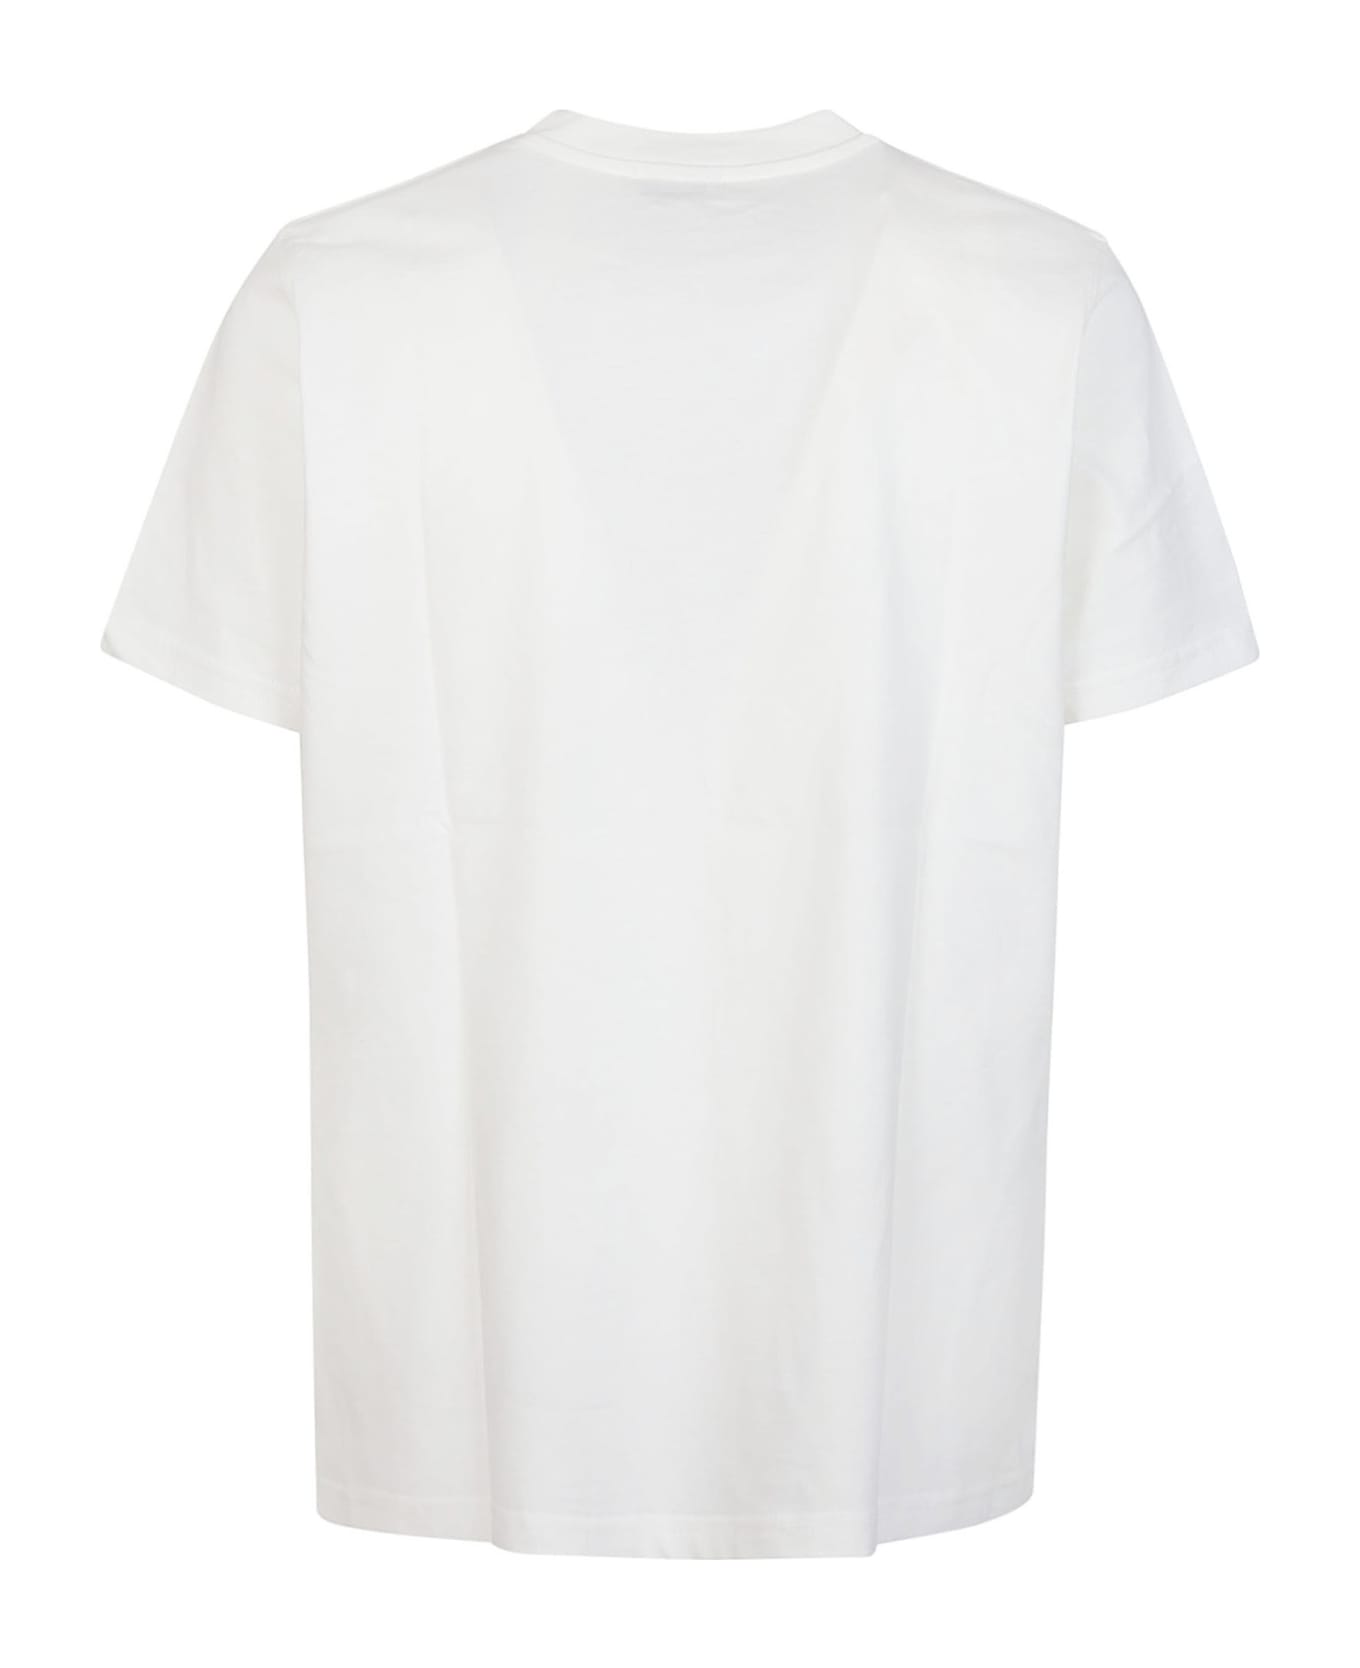 Family First Milano Heart T-shirt - White シャツ